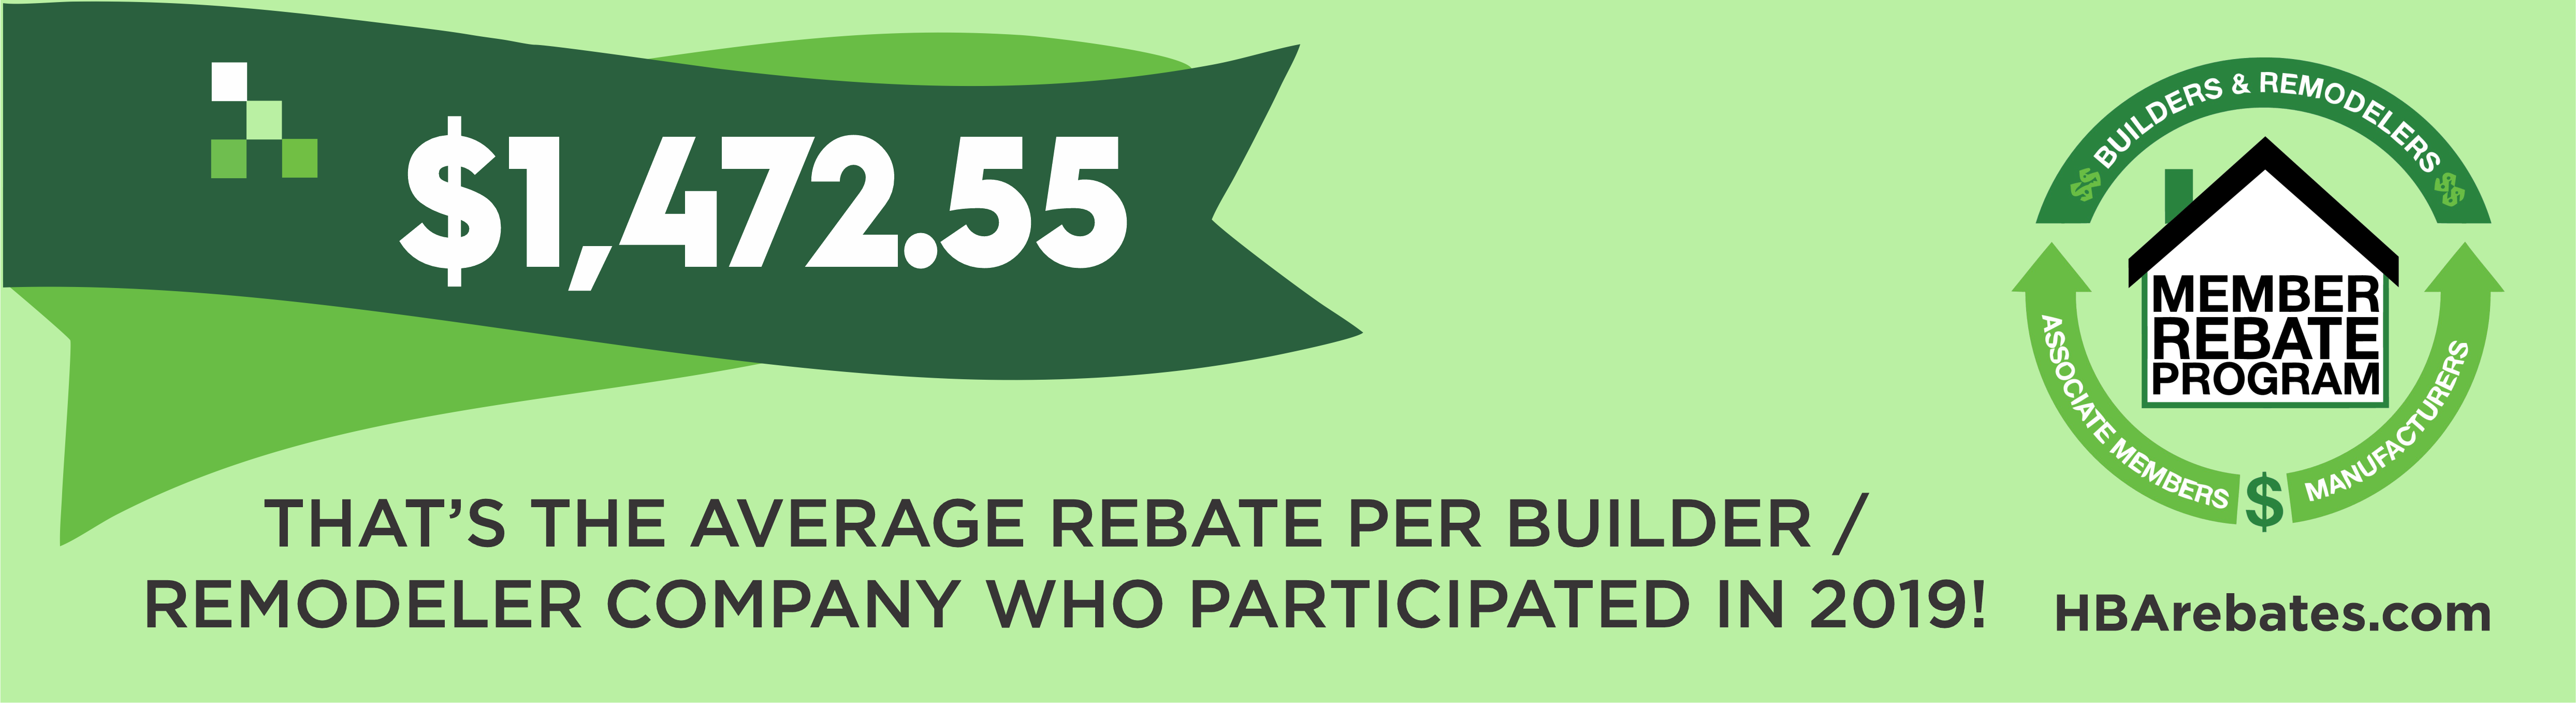 builders-and-remodelers-save-money-through-hbai-rebate-program